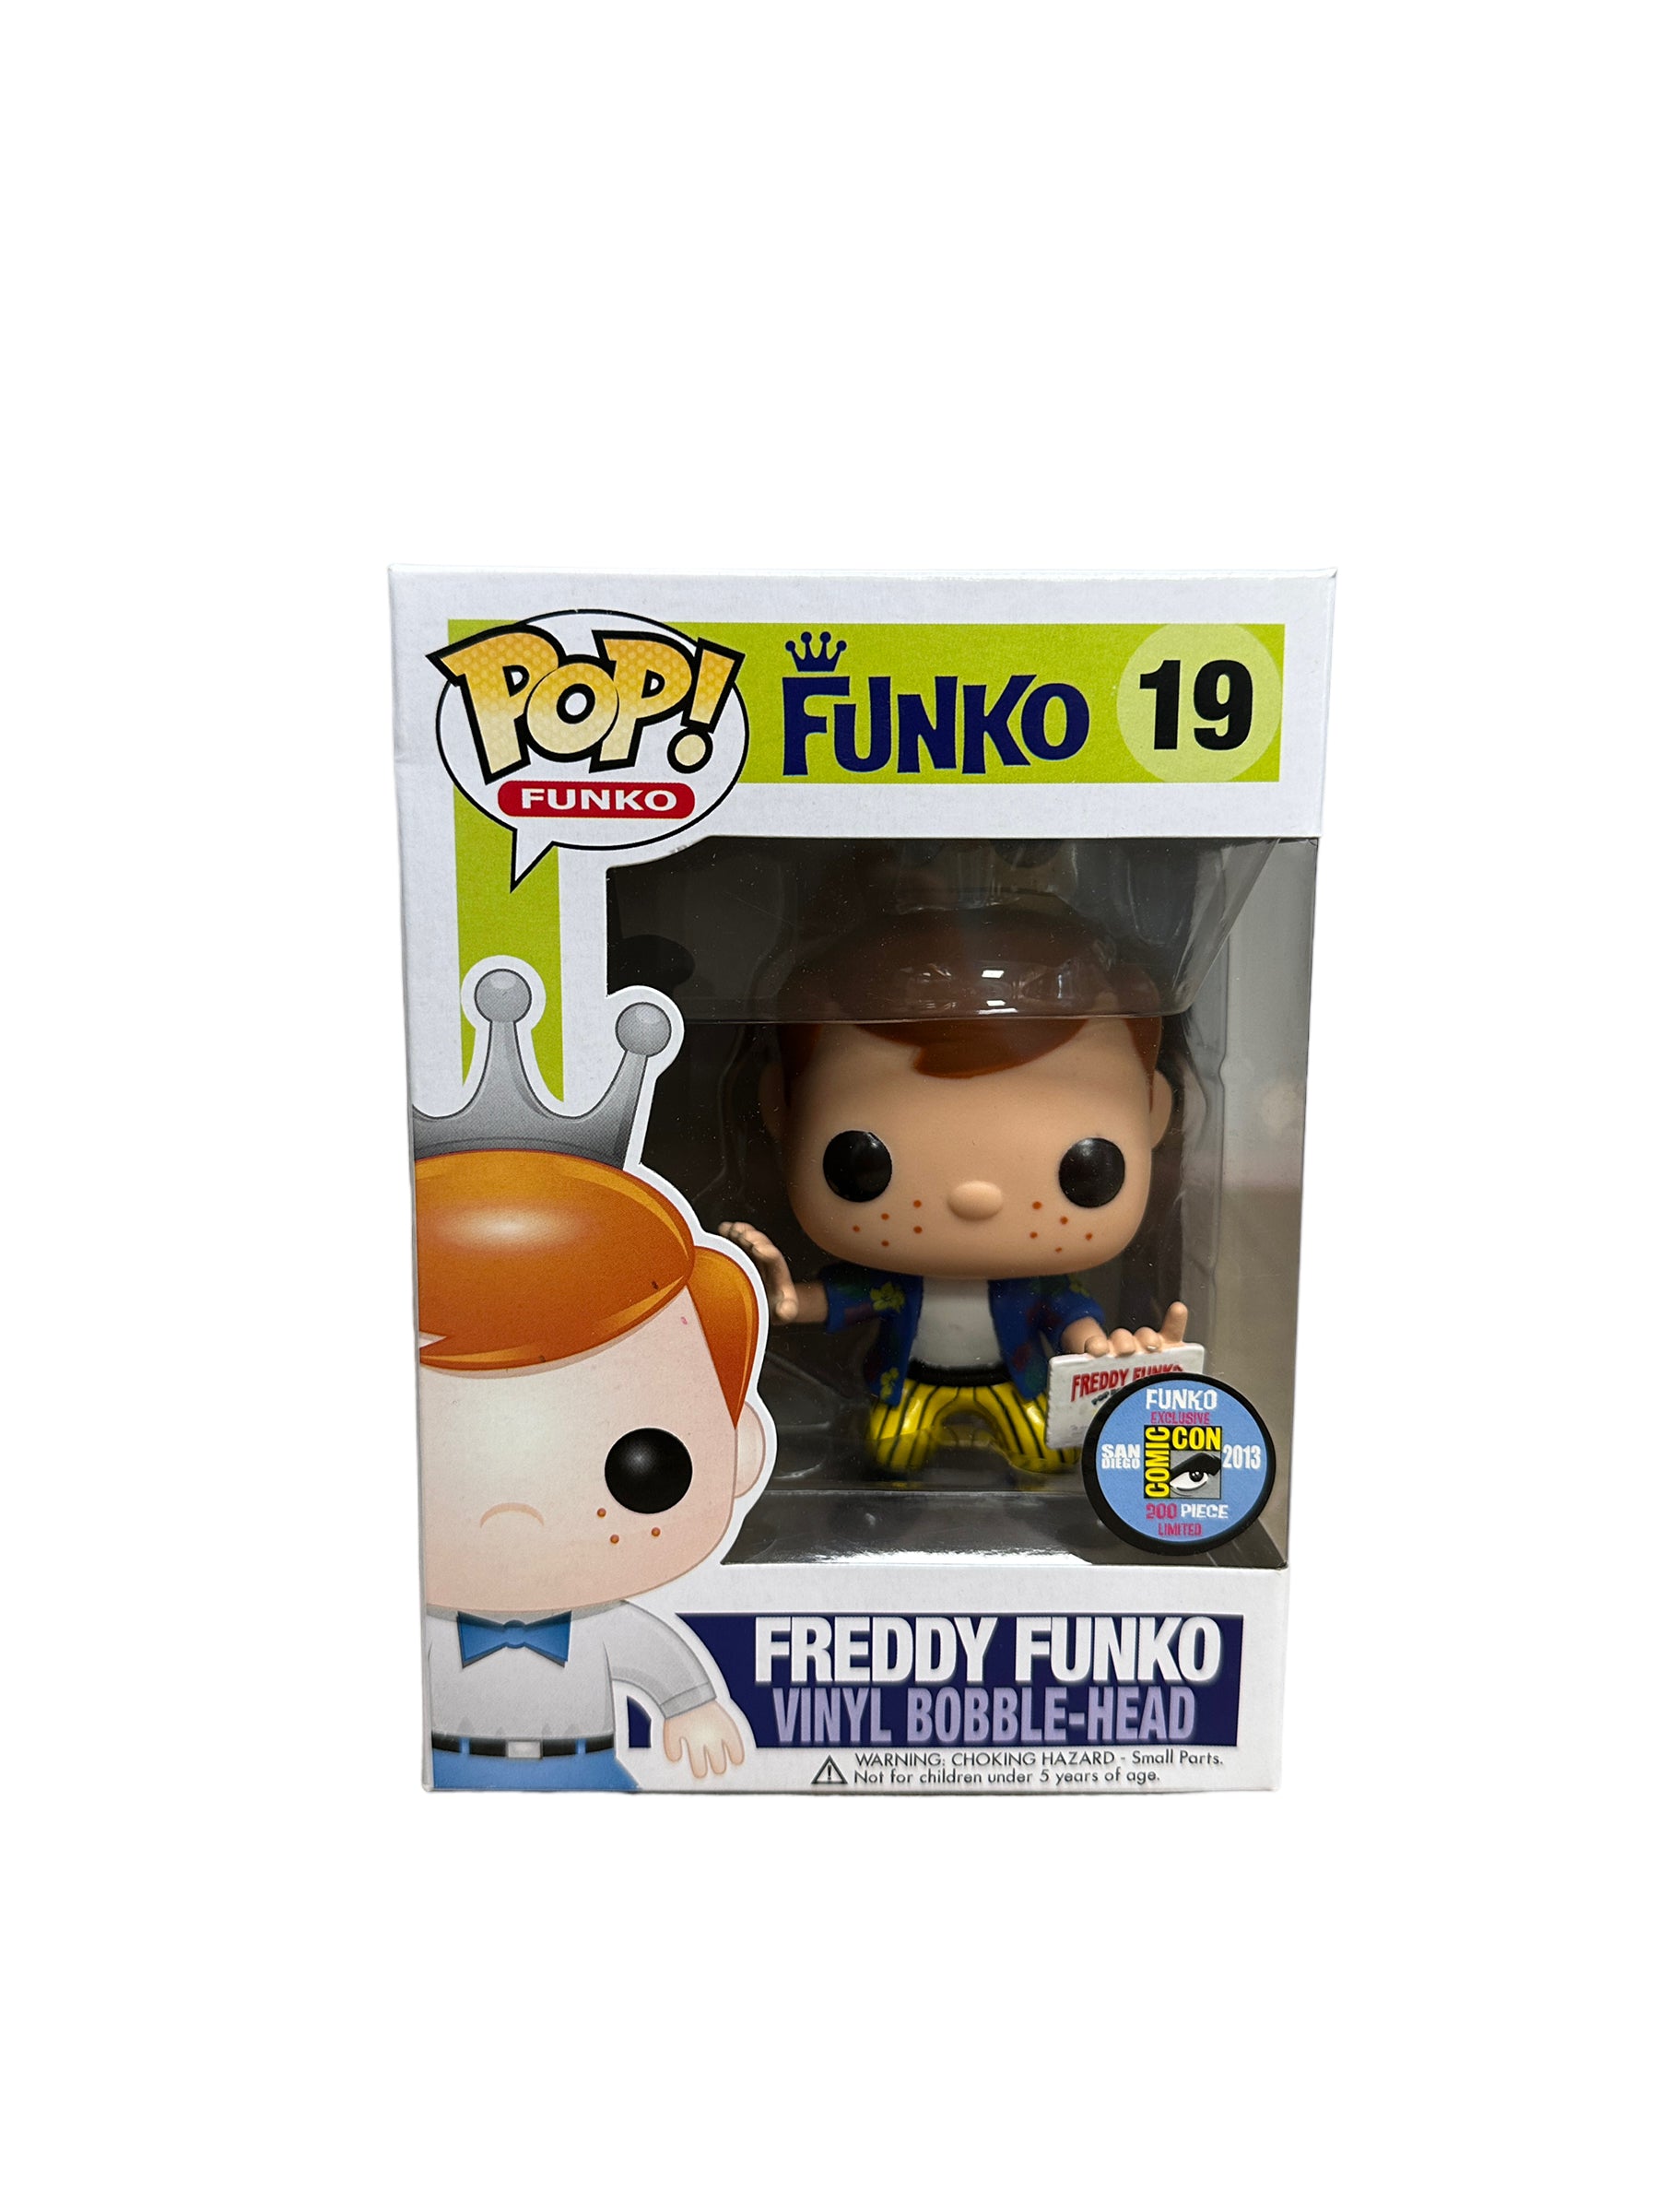 Freddy Funko as Ace Ventura #19 (Blue Shirt) Funko Pop! - SDCC 2013 Exclusive LE200 Pcs - Condition 8/10